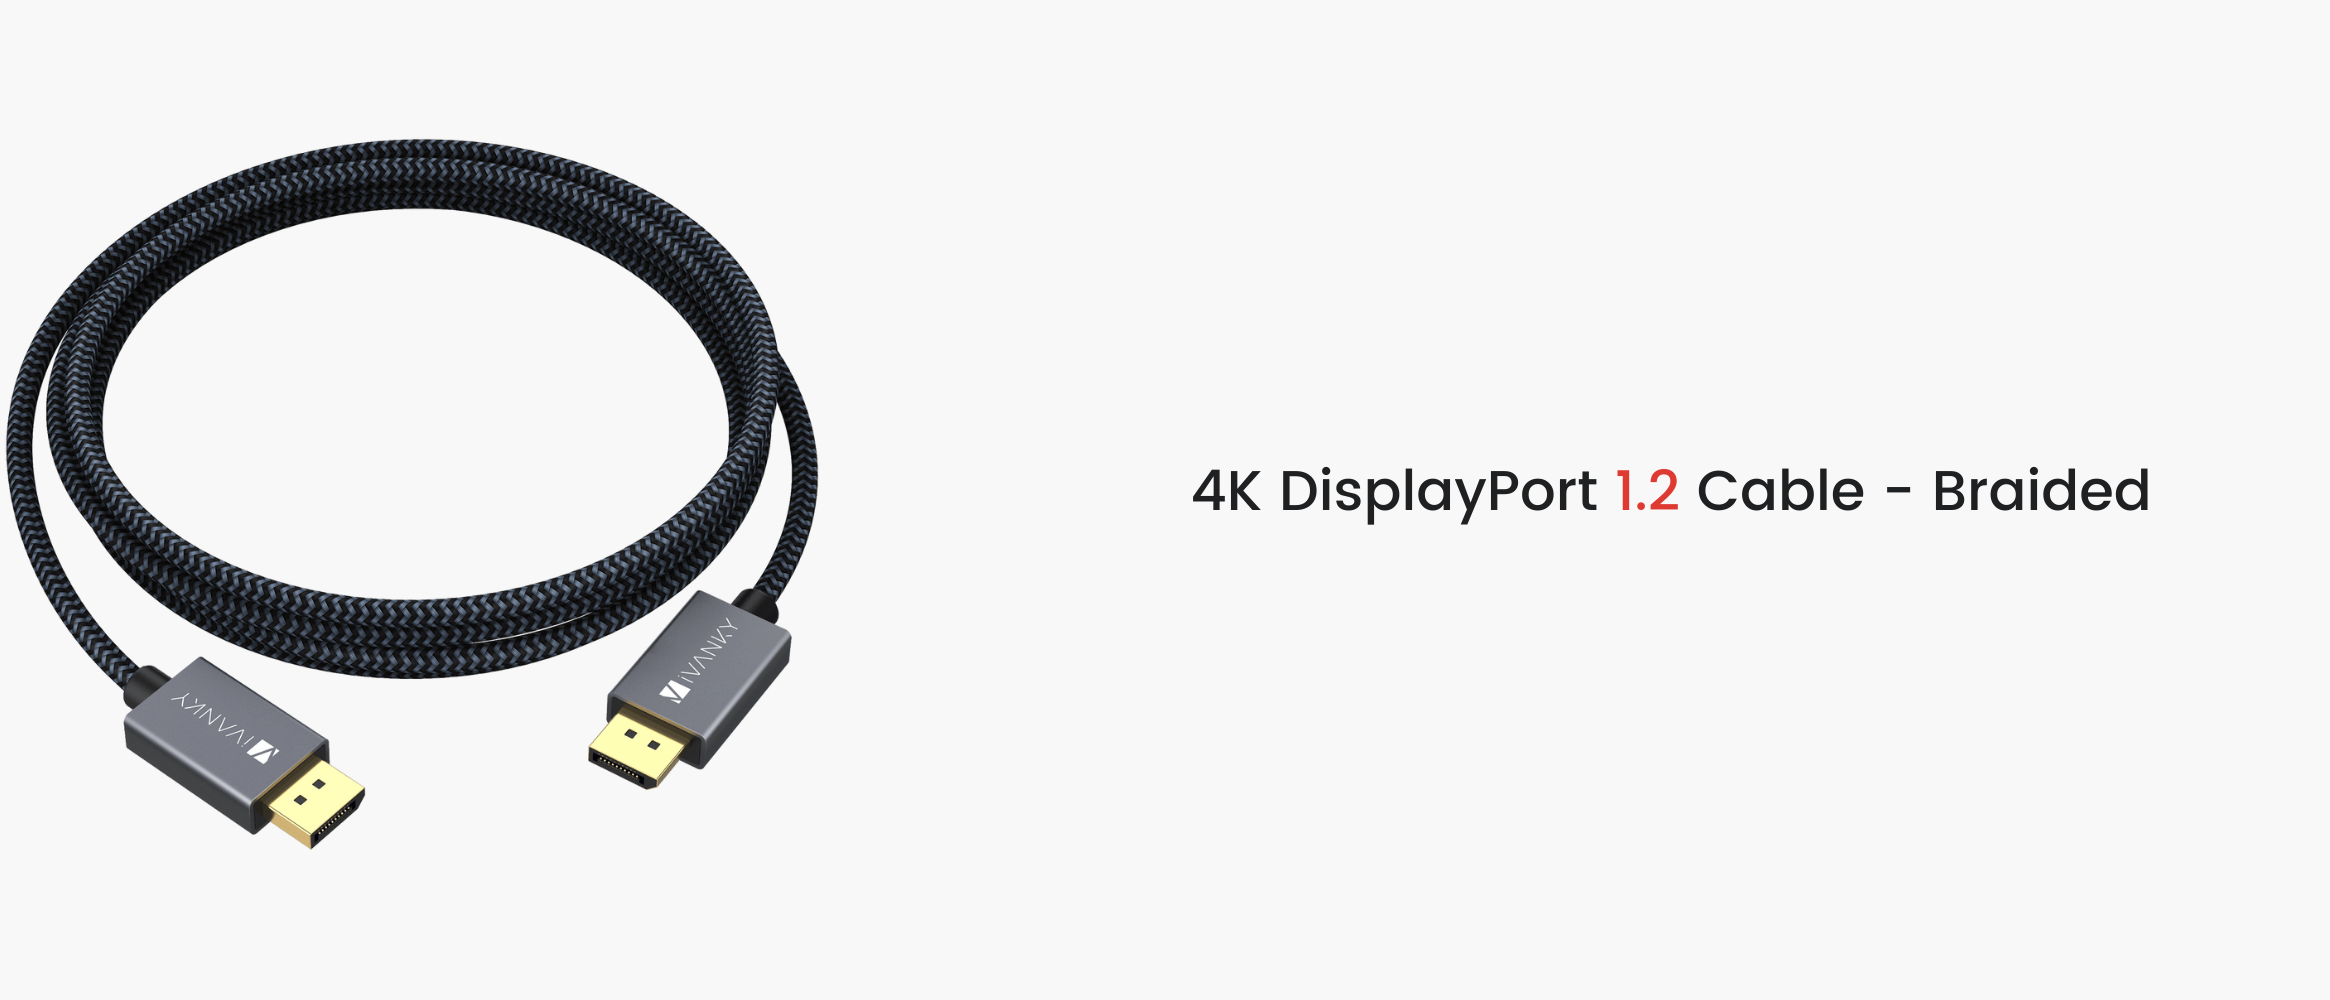 4K DisplayPort 1.2 Cable - Braided